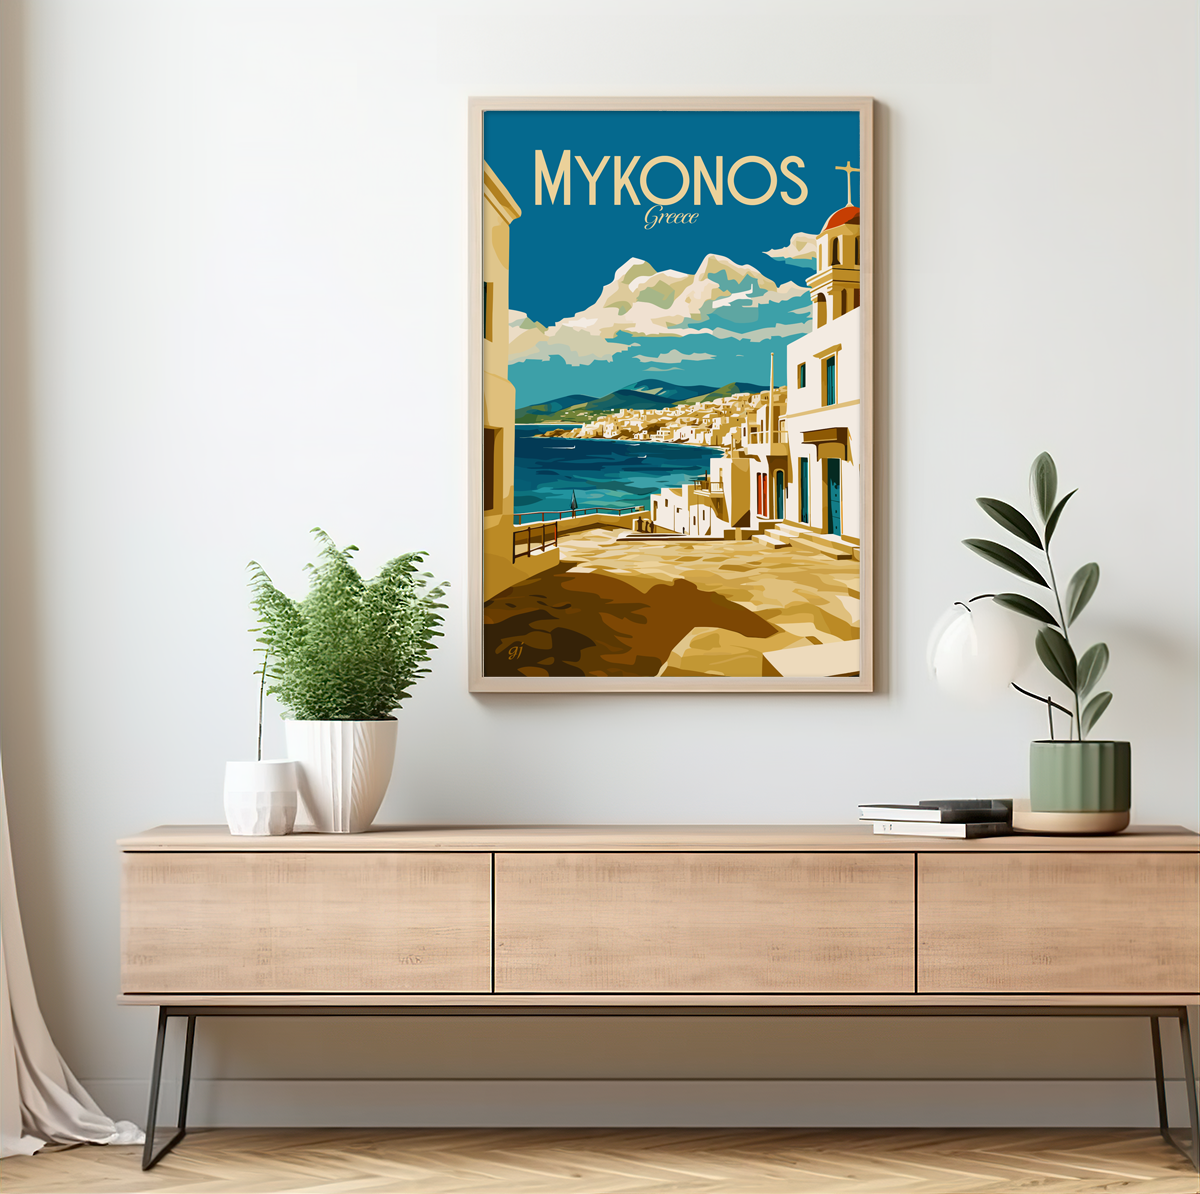 Mykonos poster by bon voyage design